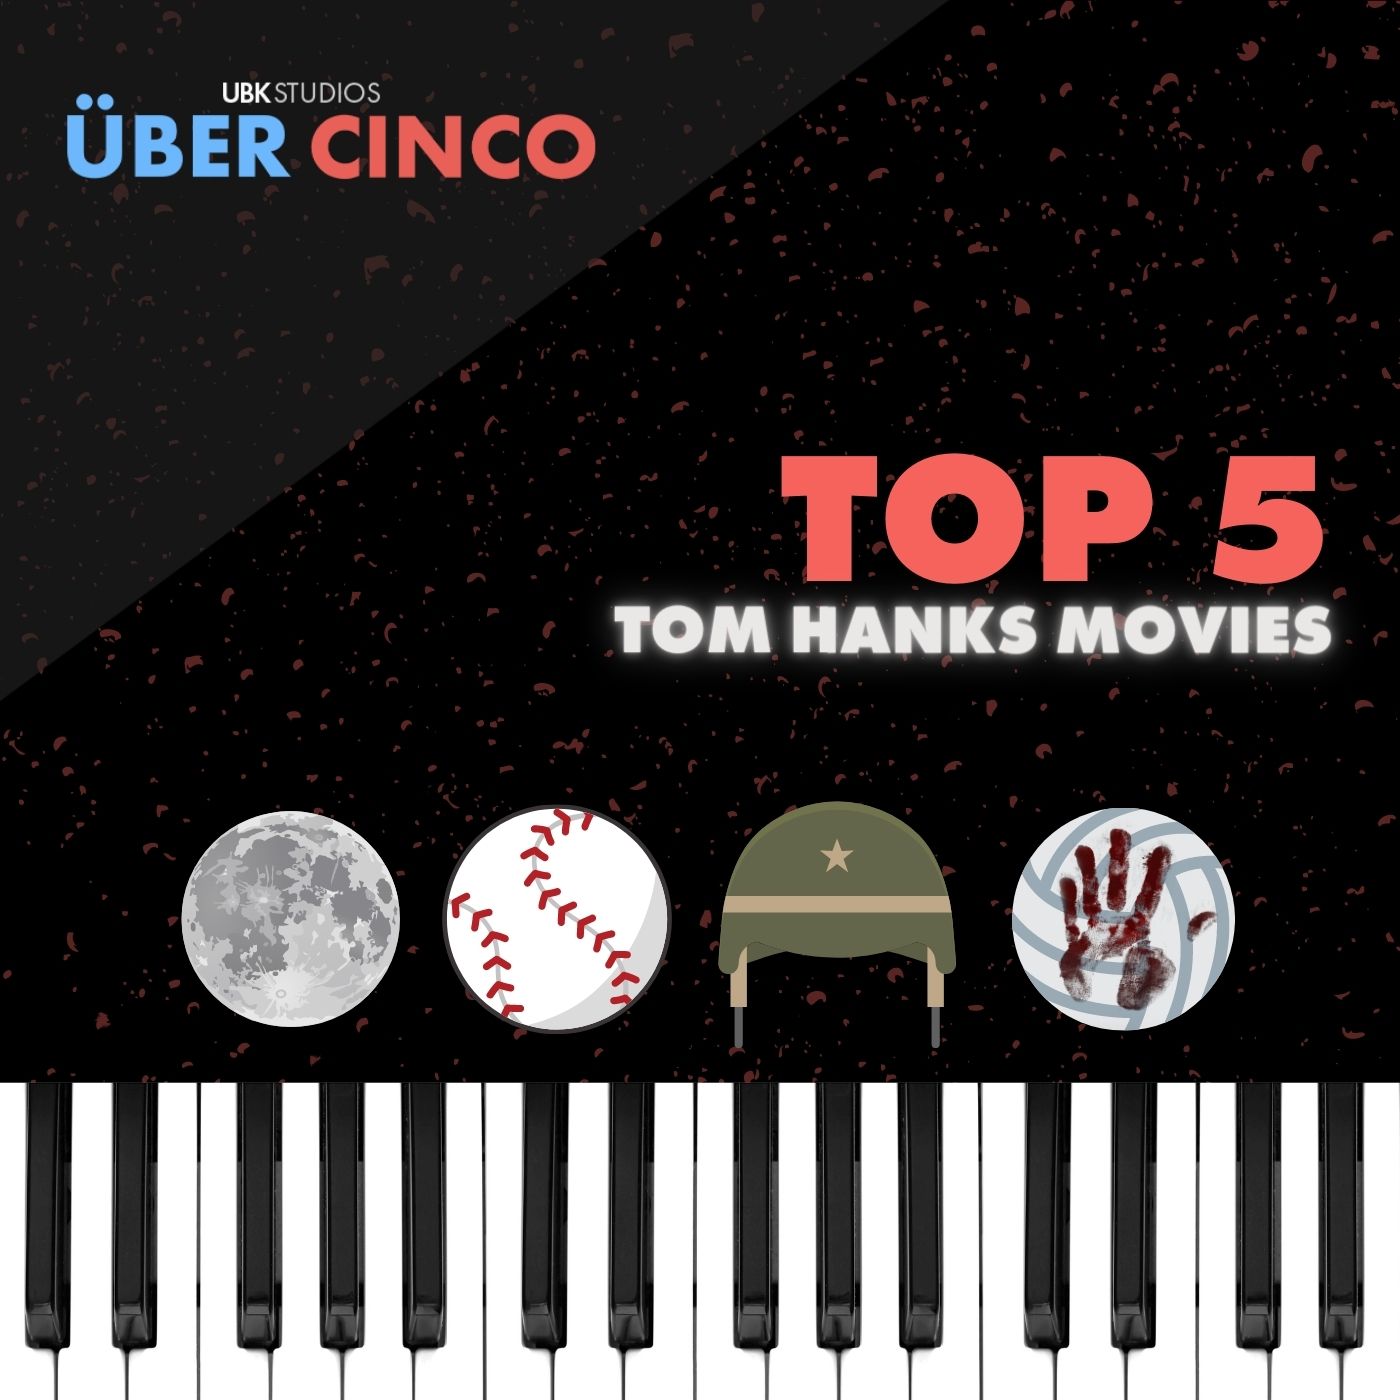 Top 5 Tom Hanks Movies Image